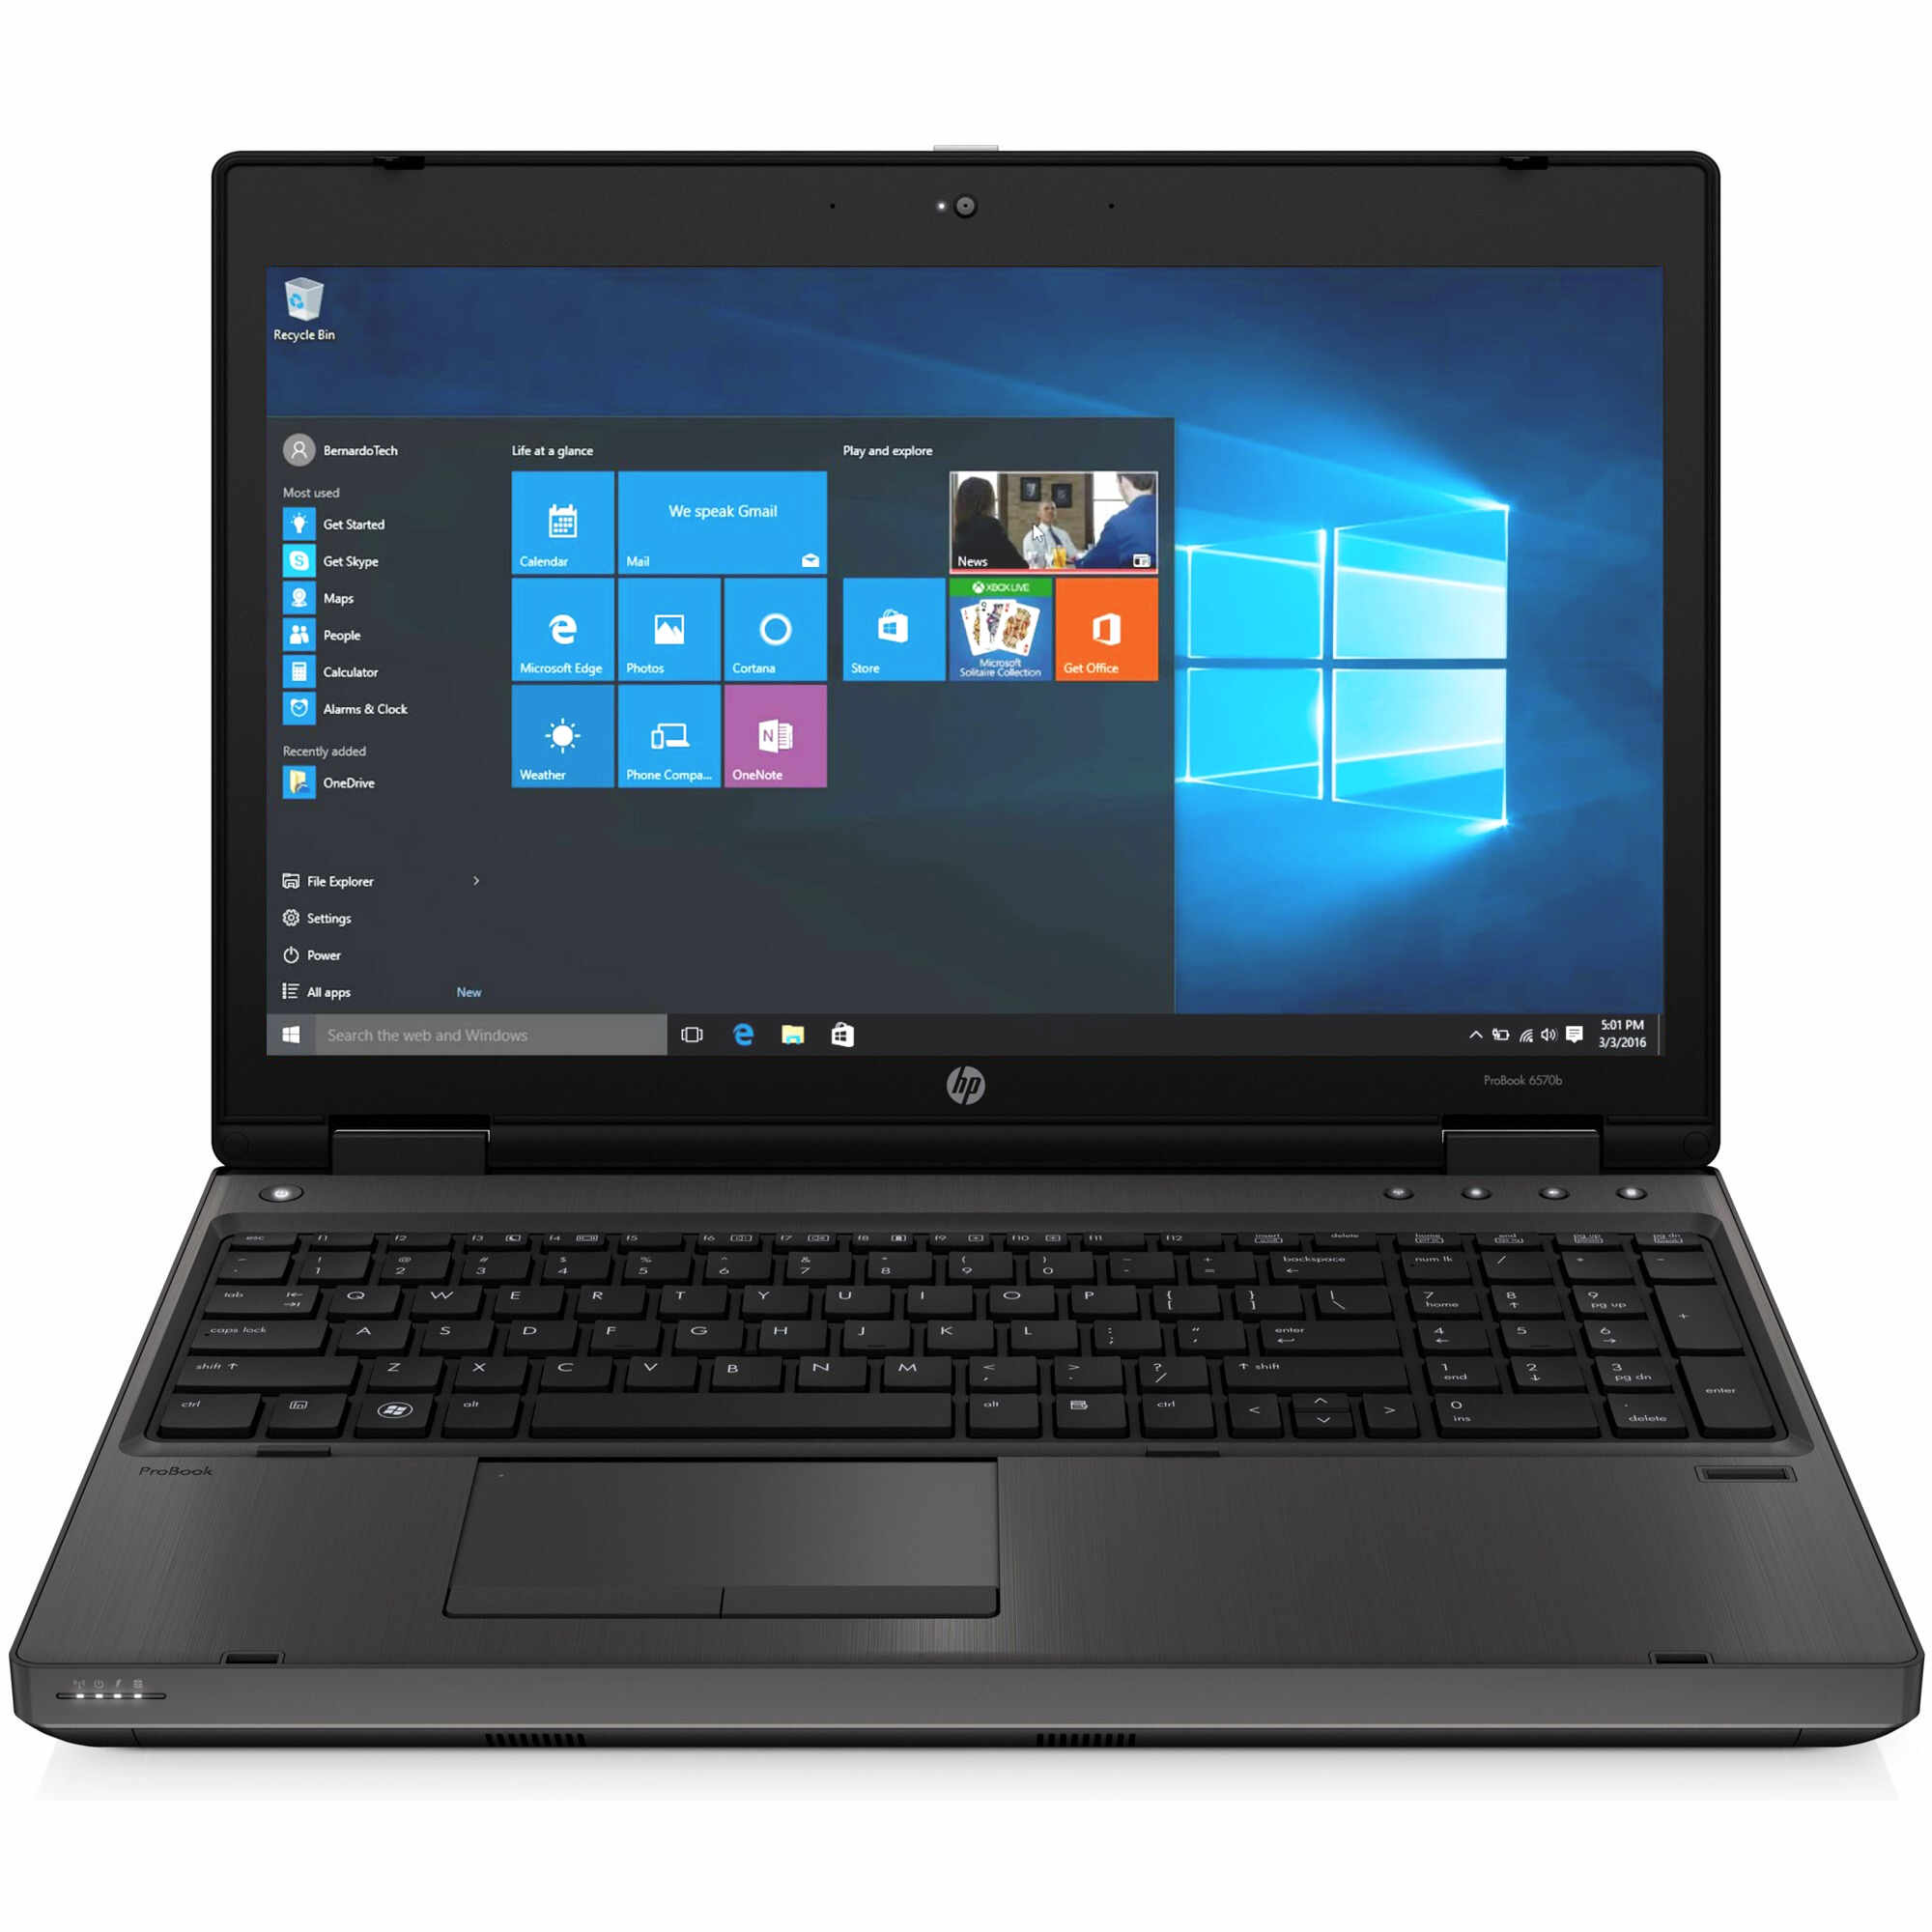 Laptop HP 6570b, Intel Core i5-3320M 2.60GHz, 4GB DDR3, 500GB SATA, DVD-RW, 15.6 Inch, Webcam, Tastatura Numerica, Grad B (0274)